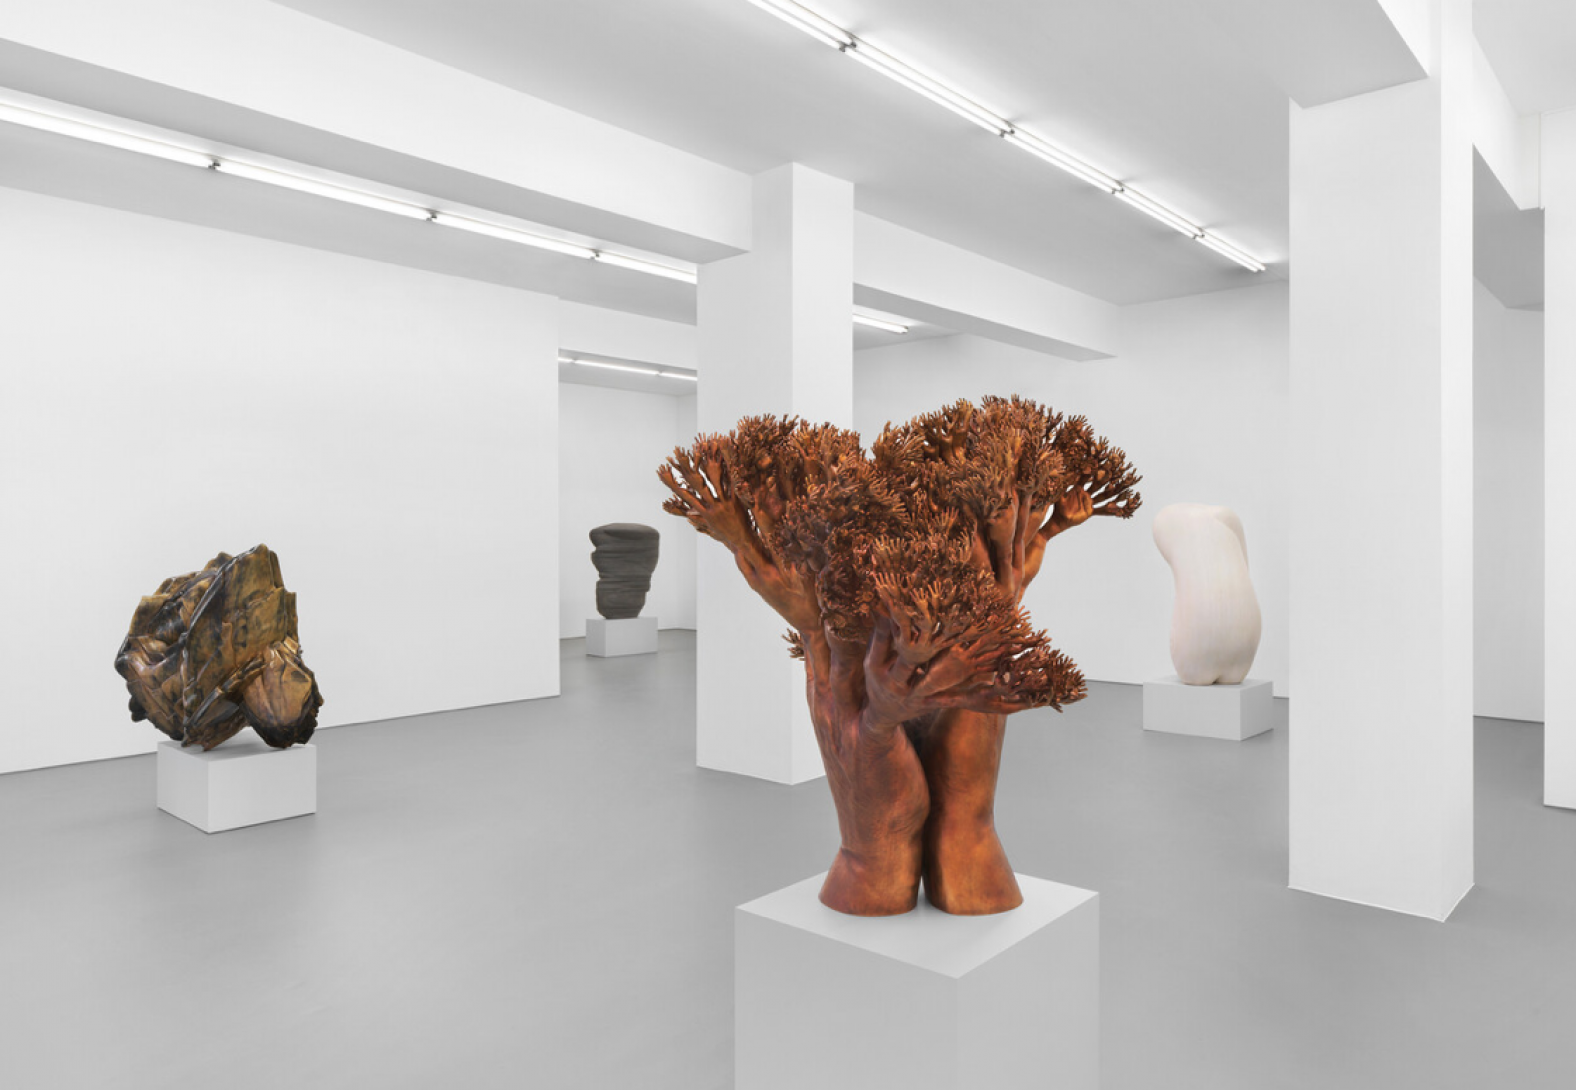 Tony Cragg "Sculptures" in Buchmann Galerie 20 MAR-21 JUN 2021, Berlin